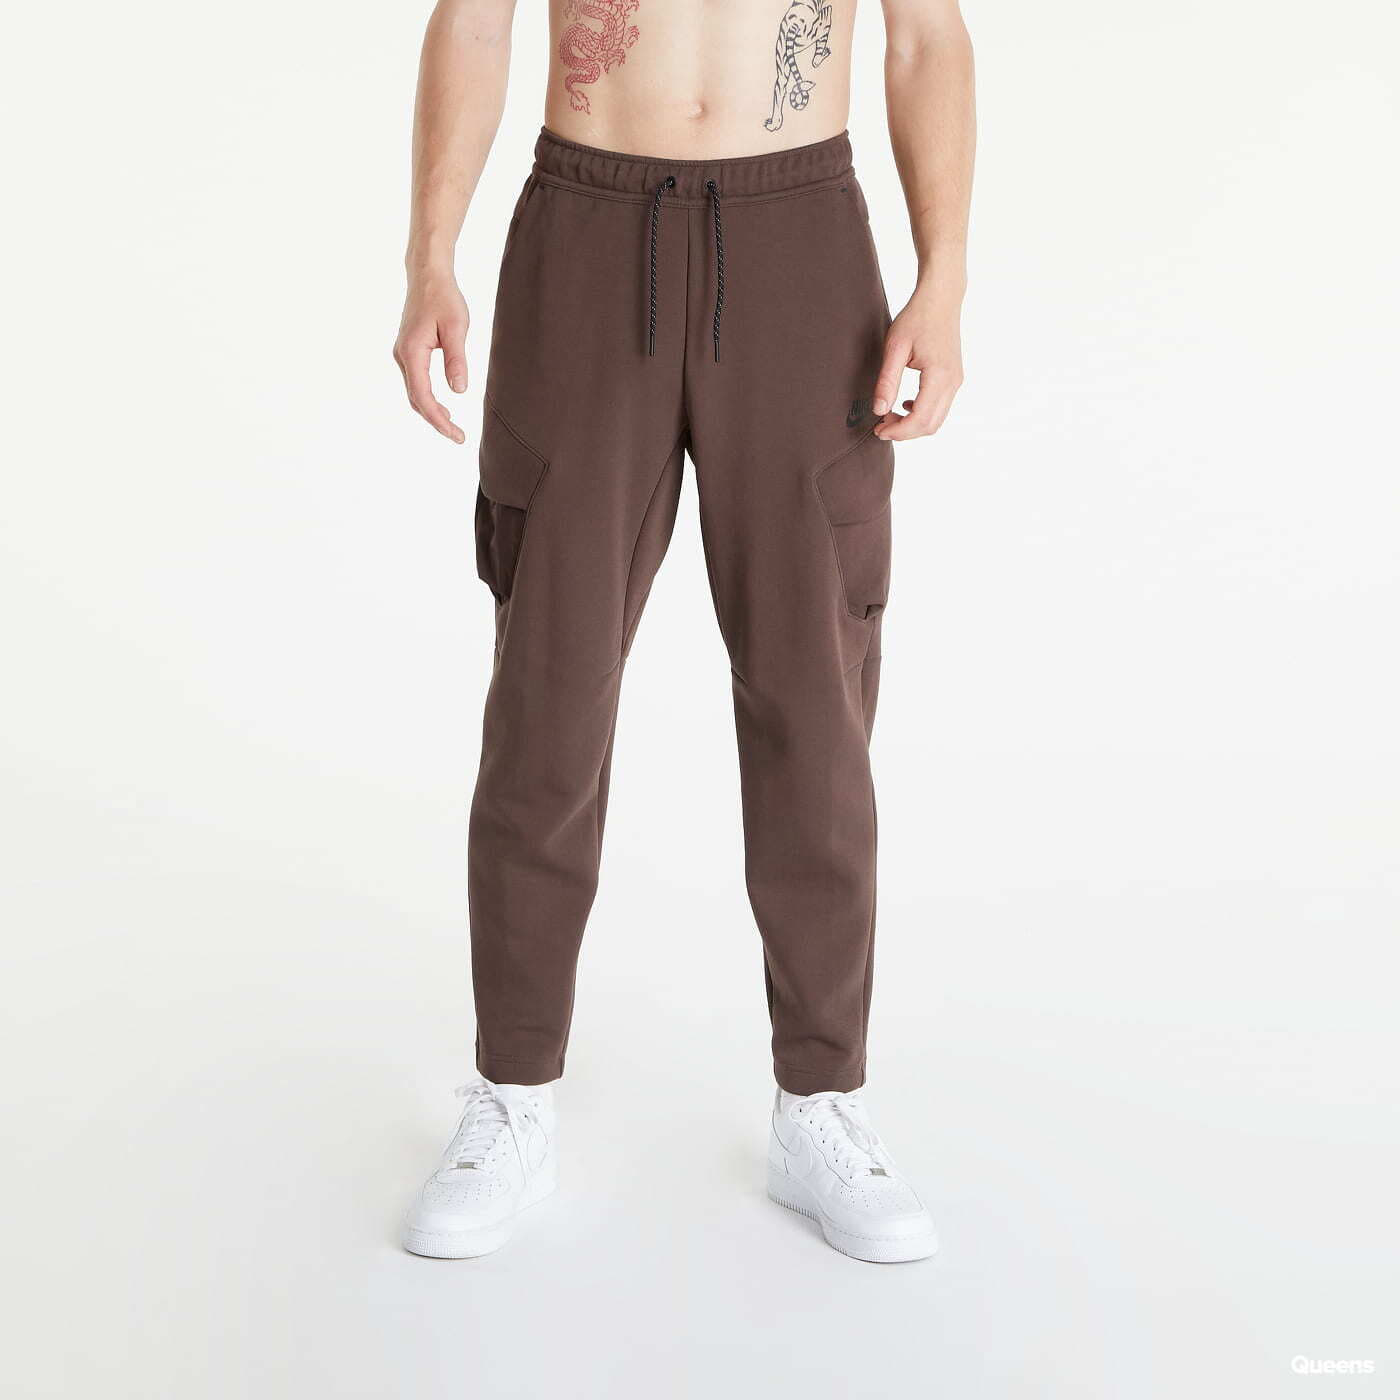 Trenirka Nike NSW Tech Fleece Utility Pants S Baroque Brown/ Baroque Brown/ Black